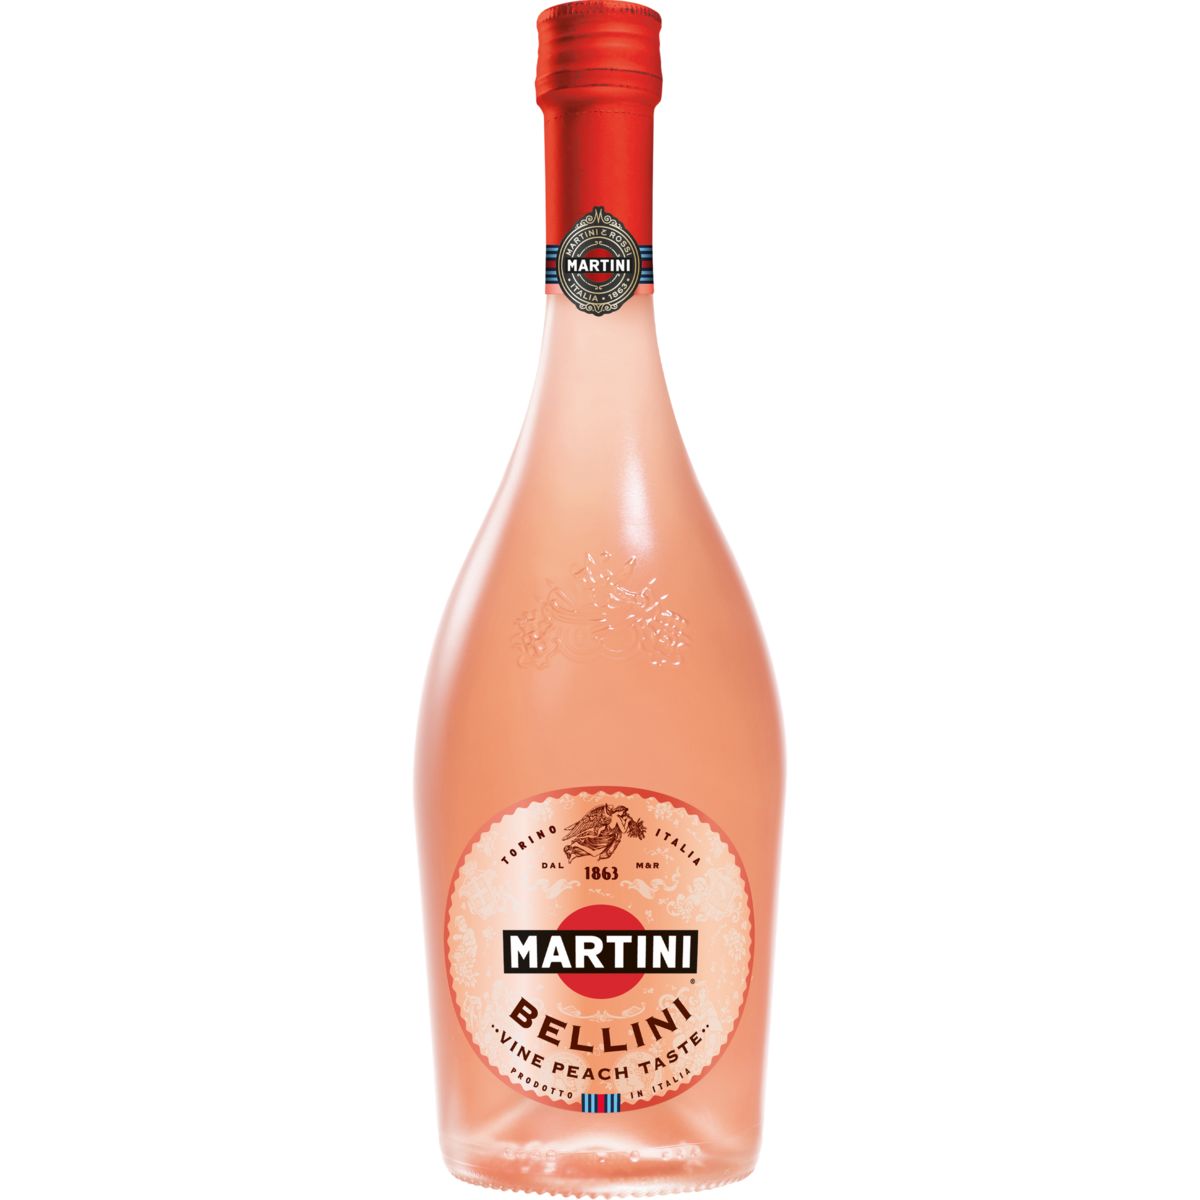 MARTINI Bellini Vine Peach Taste 75cl 8%